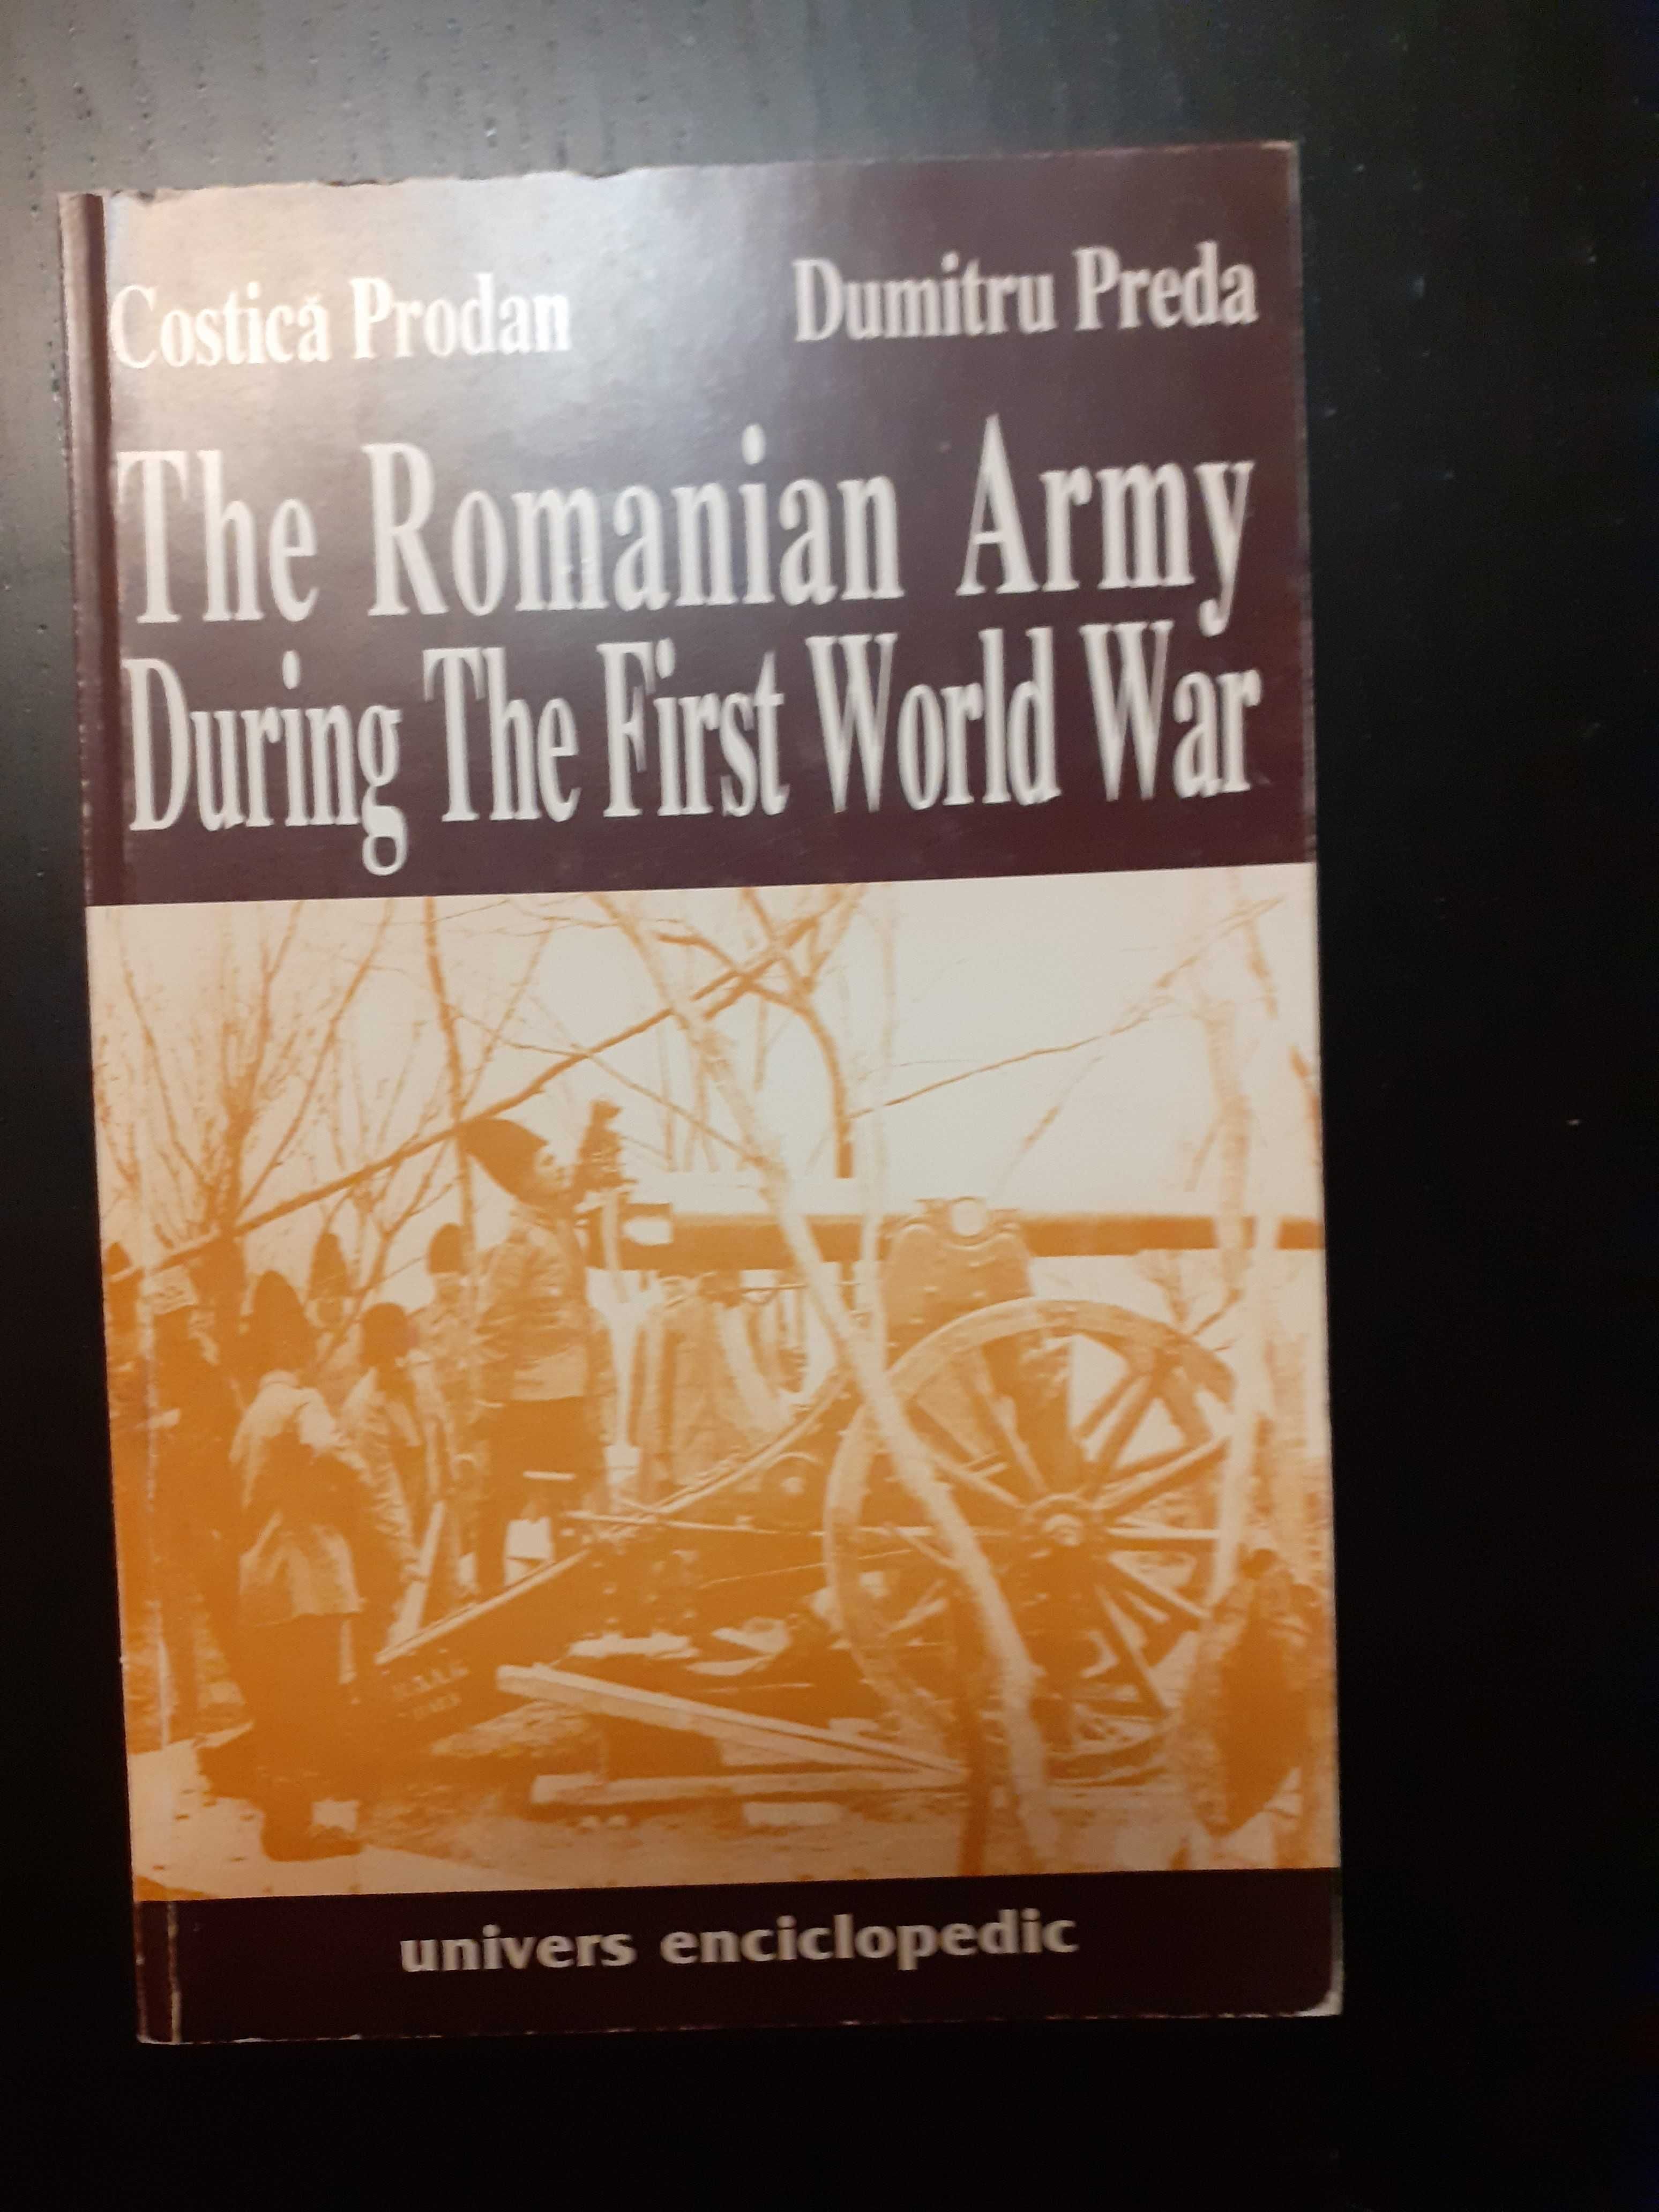 C. Prodan, D. Preda - Romanian Army During the First World War